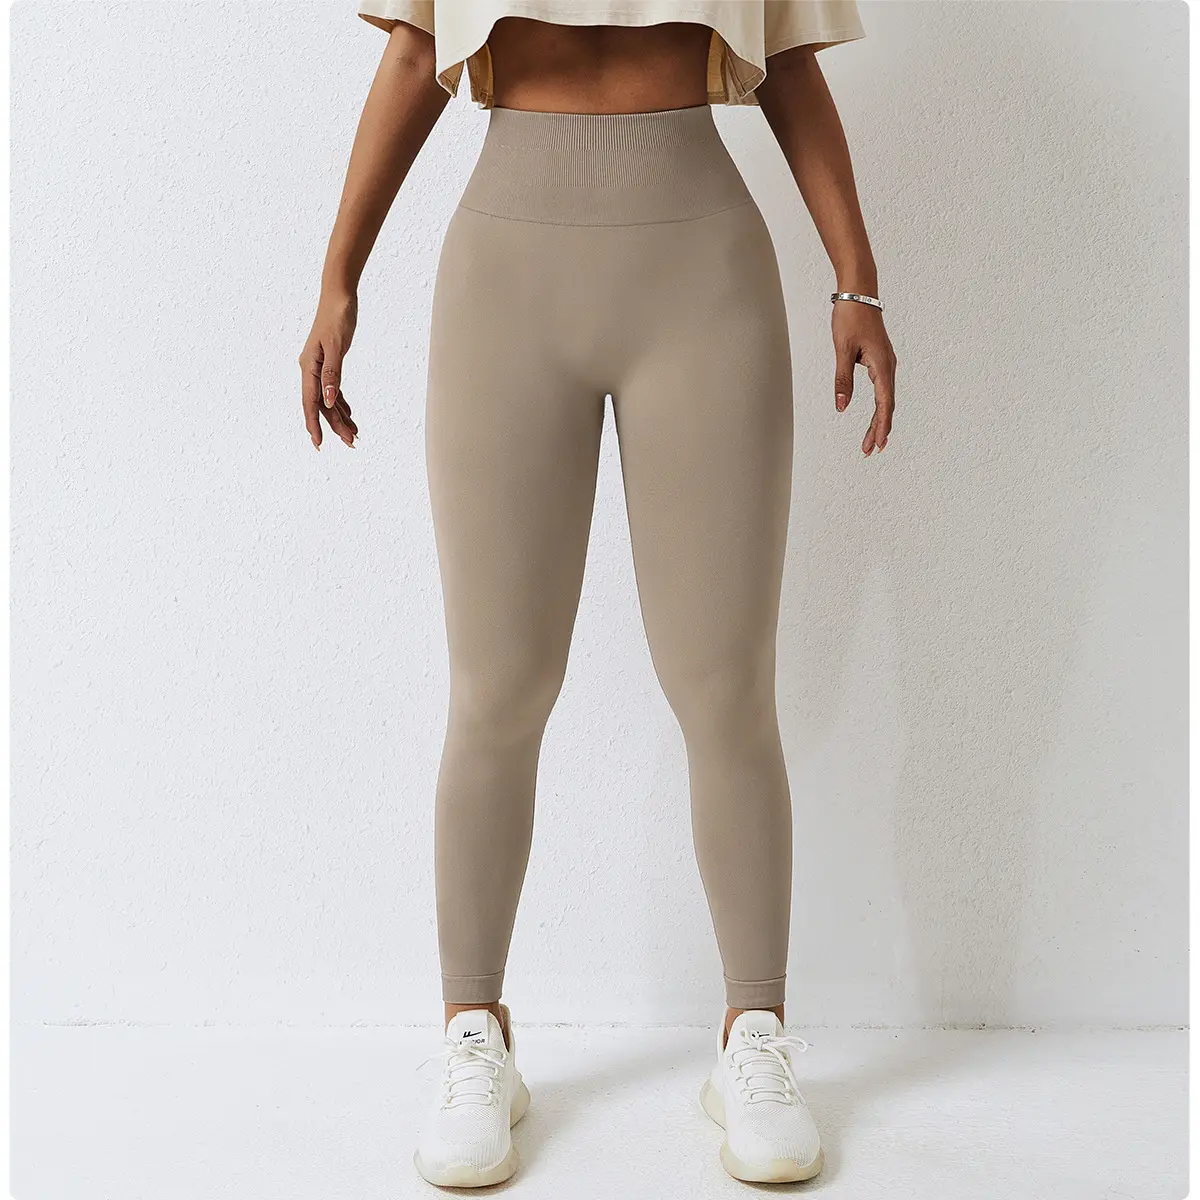 GC leggins para mujer yoga leggings entrenamiento jogging wear gym wear Womens just don shorts jogging Pants fitness